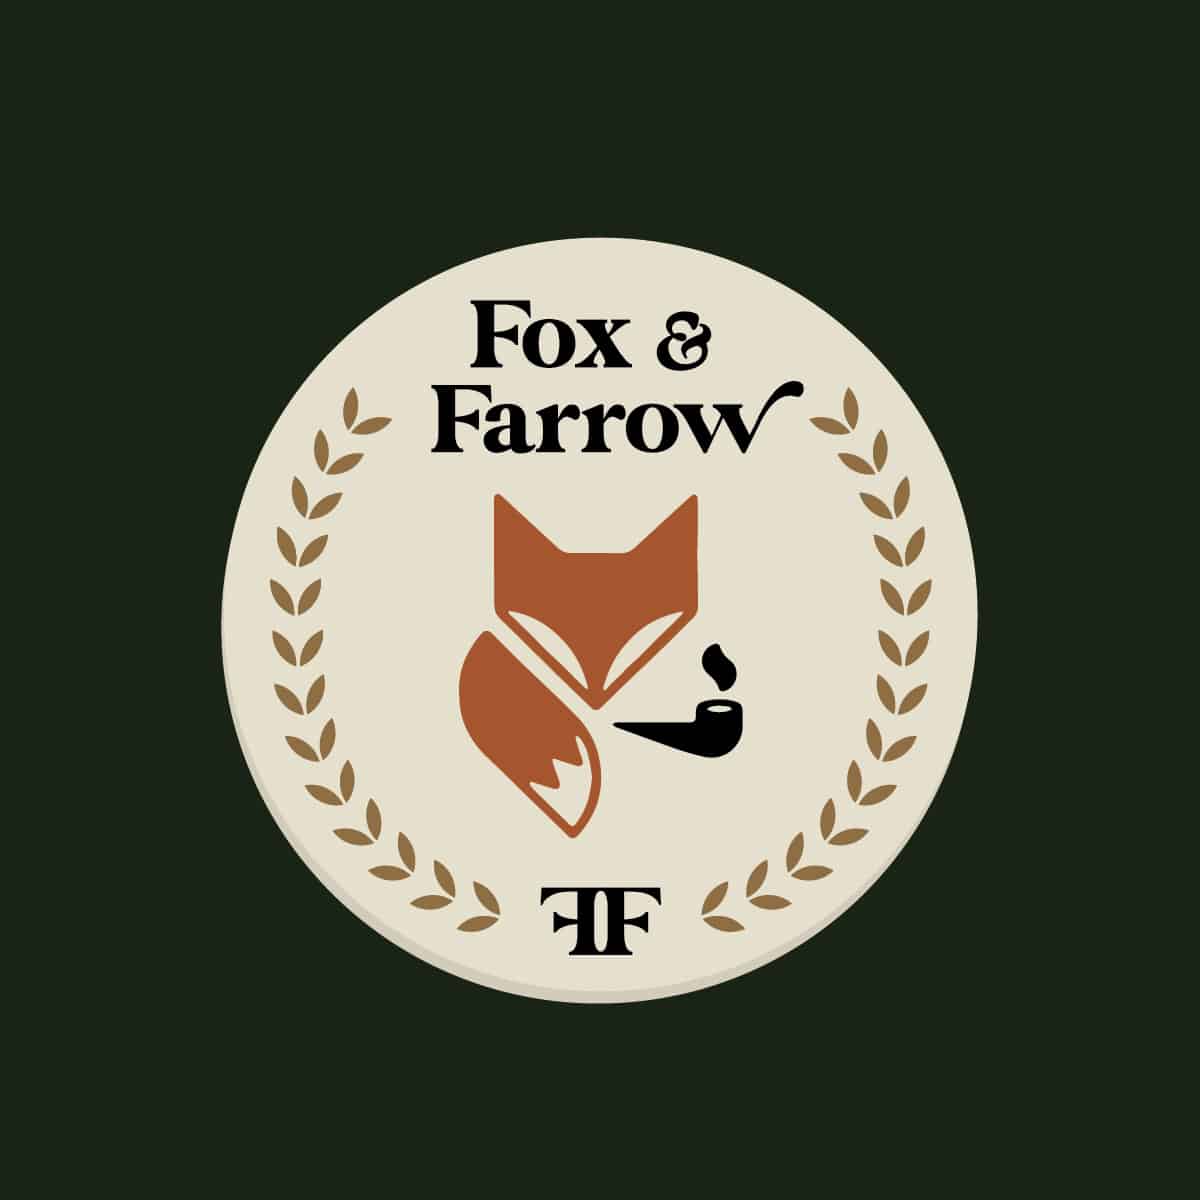 Fox and Farrow Restaurant Branding and Logo Design By Stellen Design Branding Agency in Los Angeles Ca